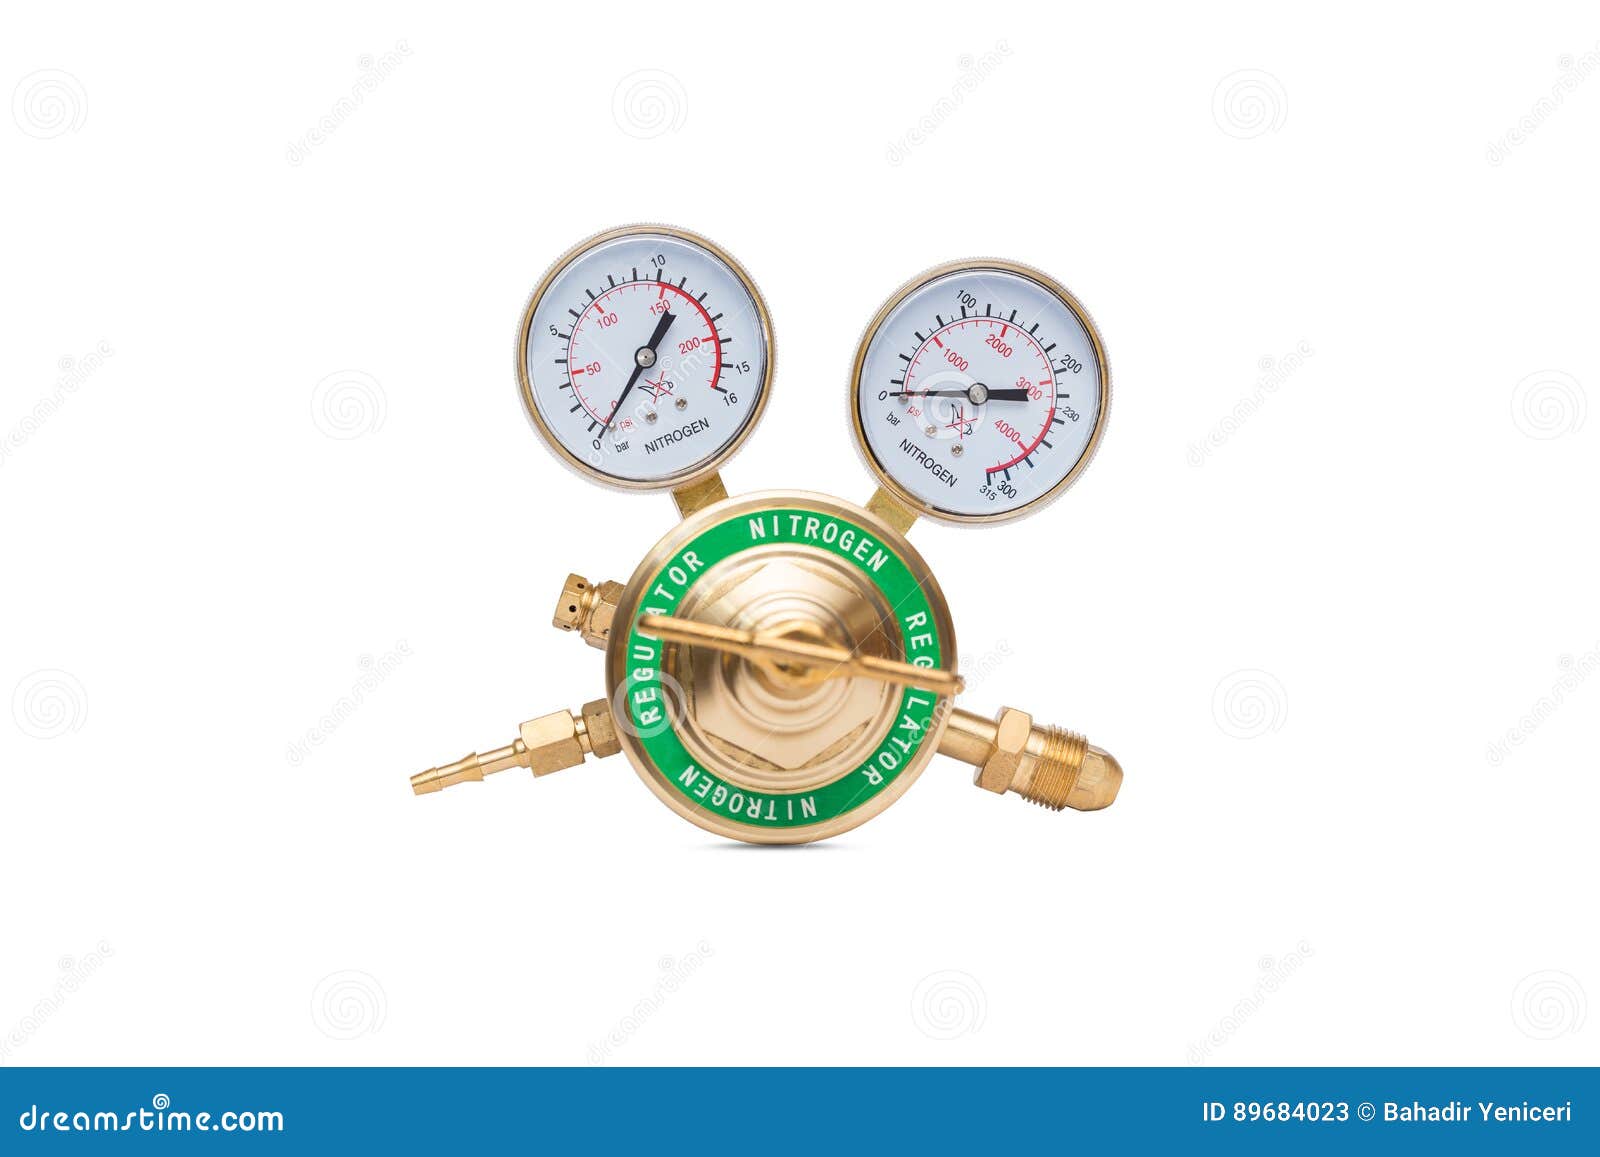 Nitrogen Regulator stock image. Image of pressure, leakage - 89684023